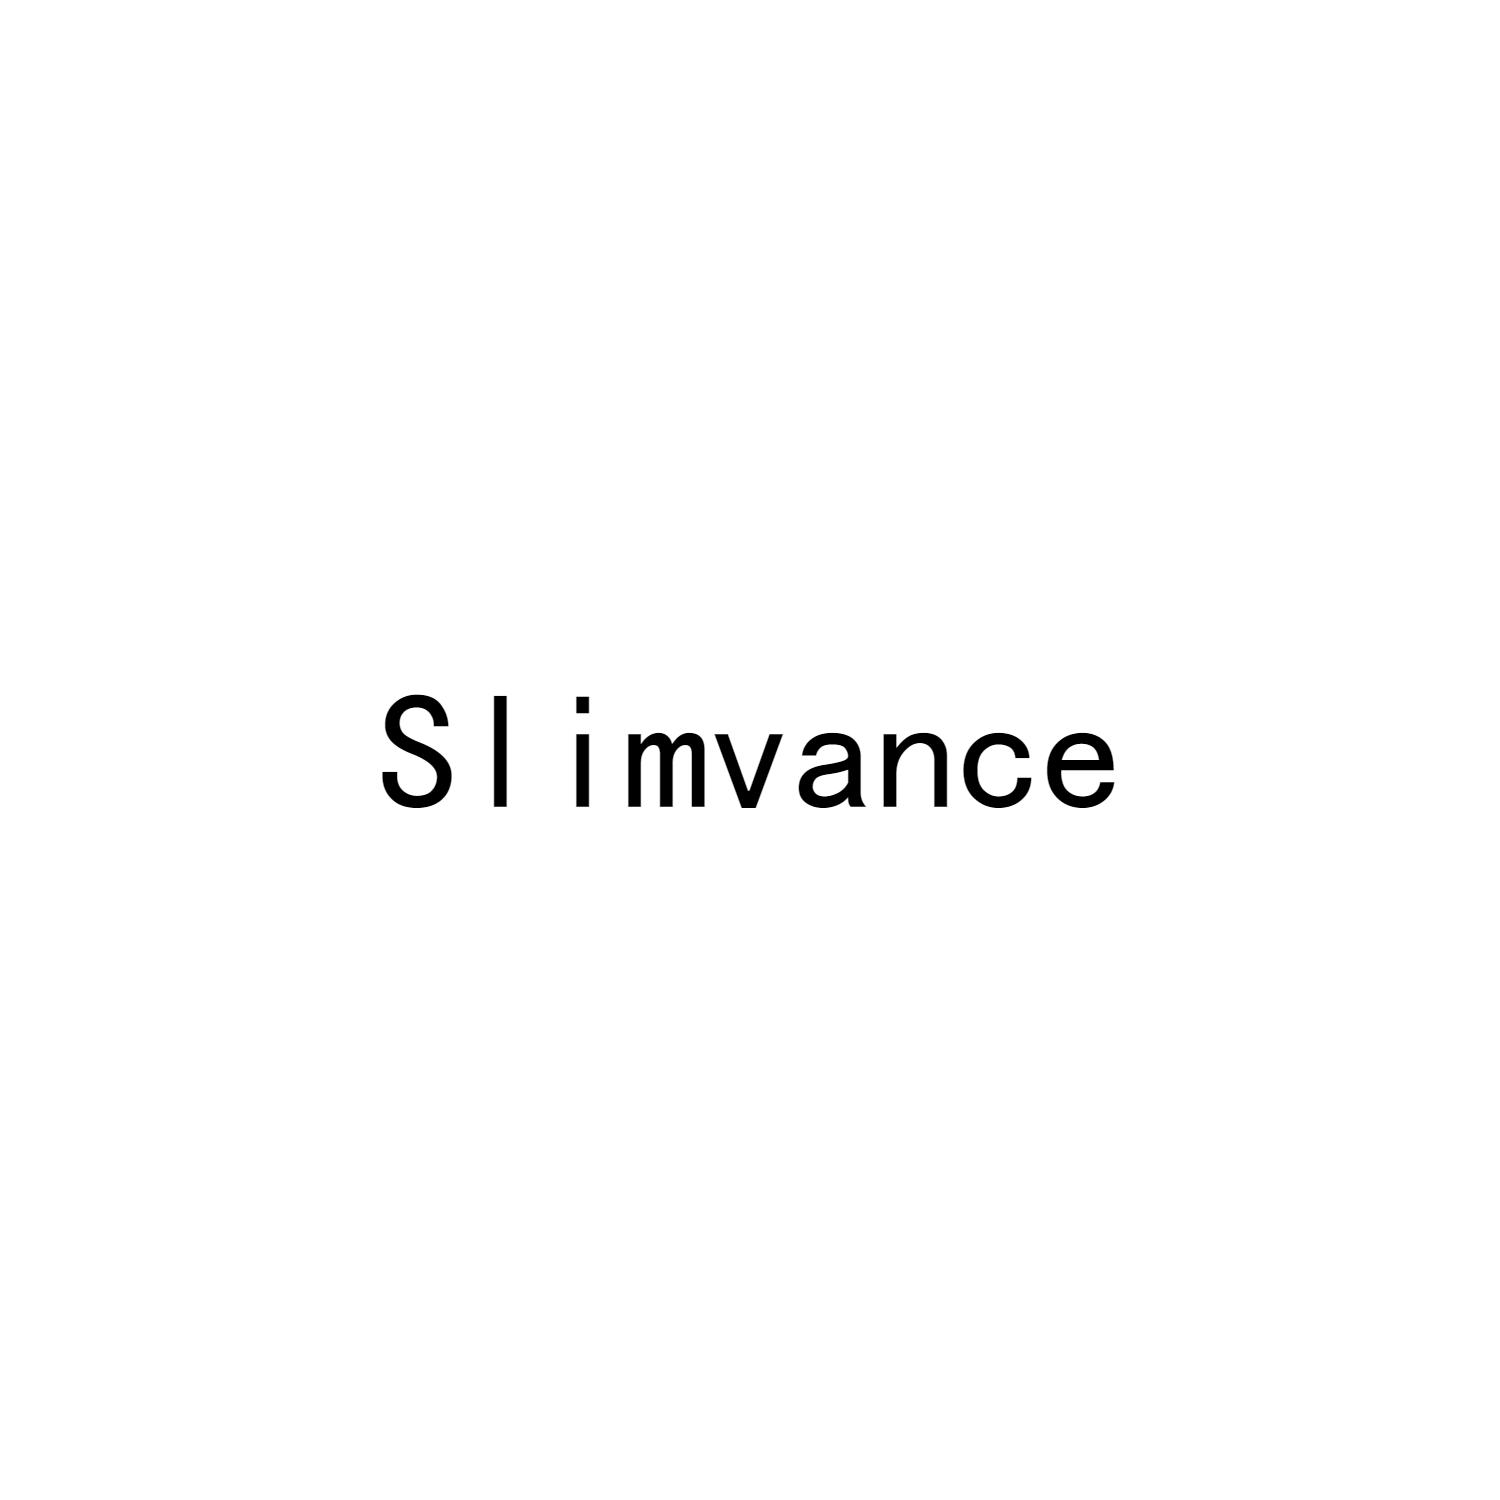 SLIMVANCE